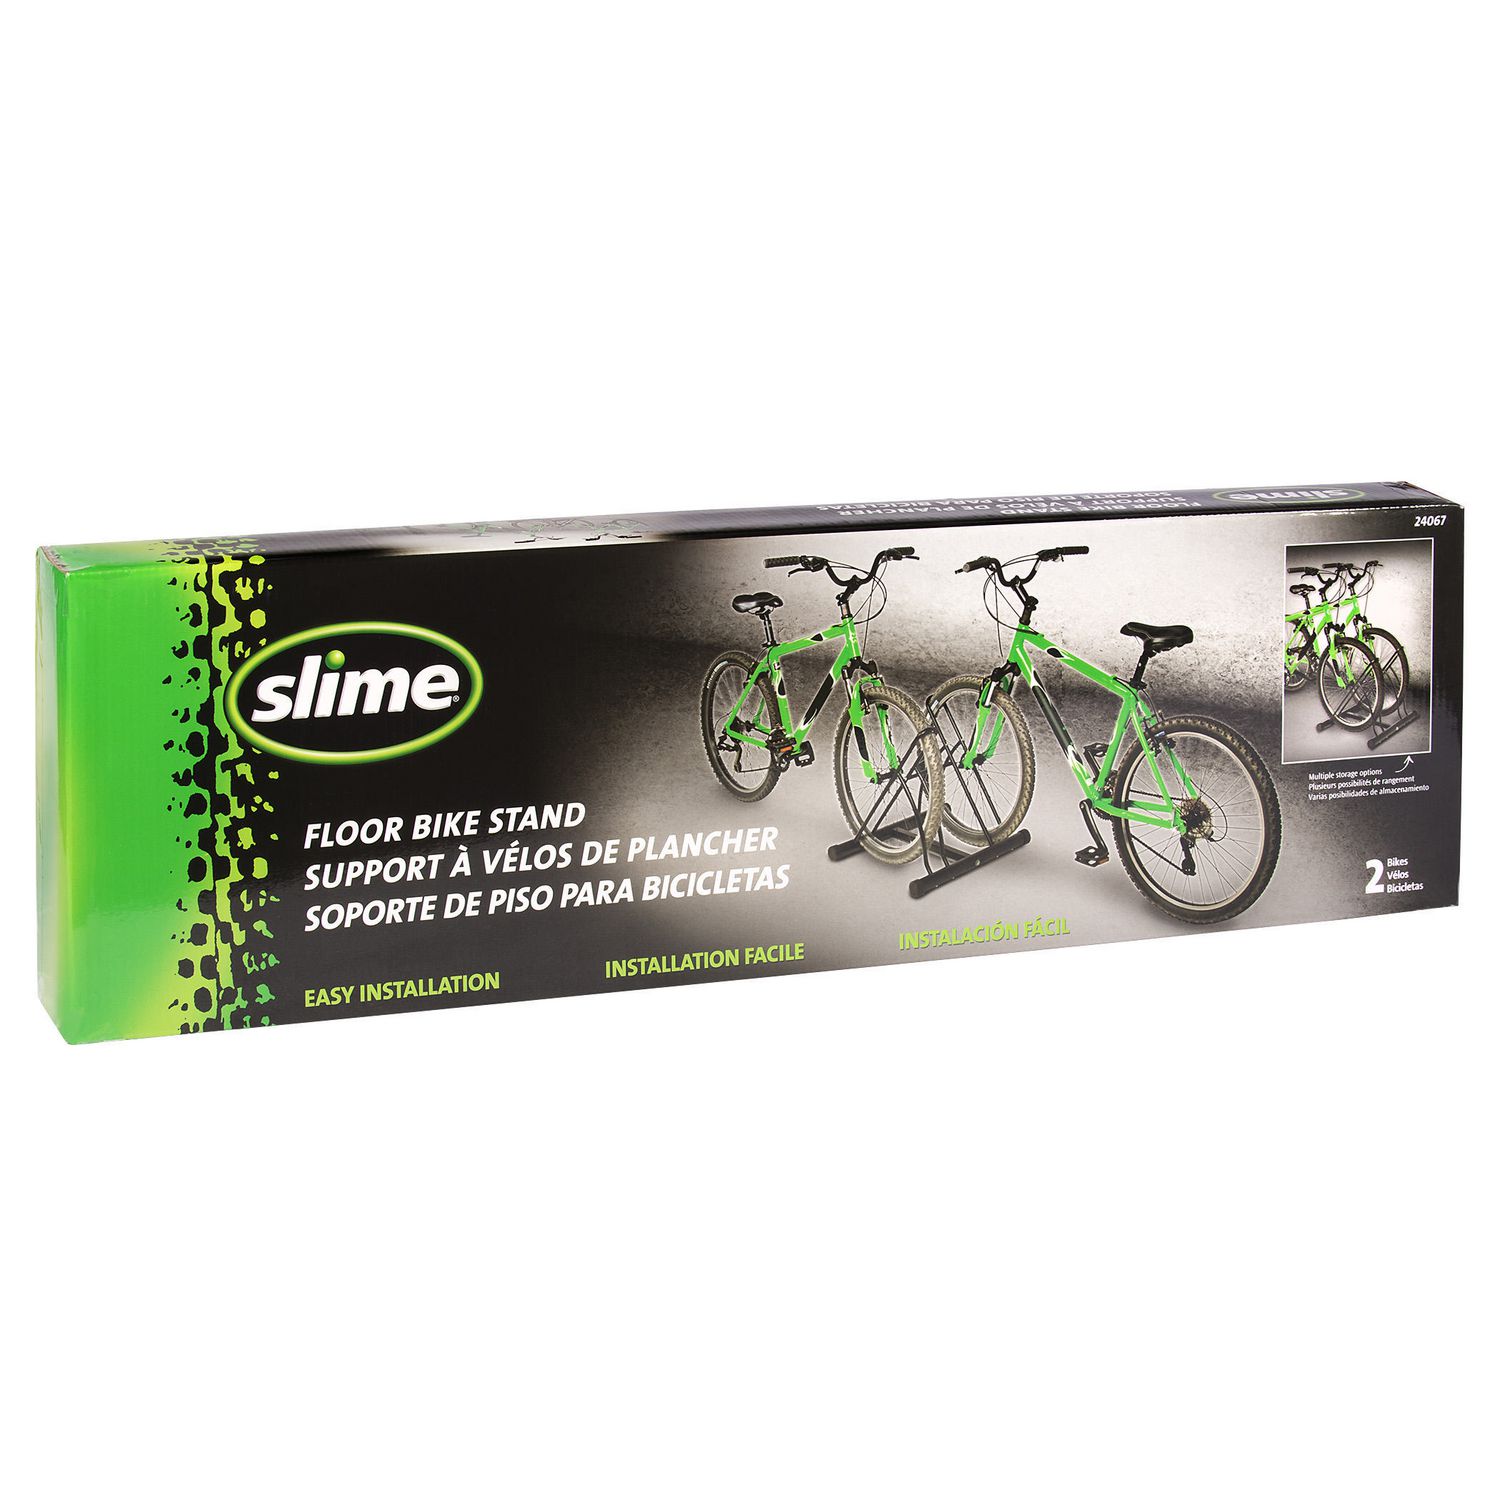 slime floor bike stand